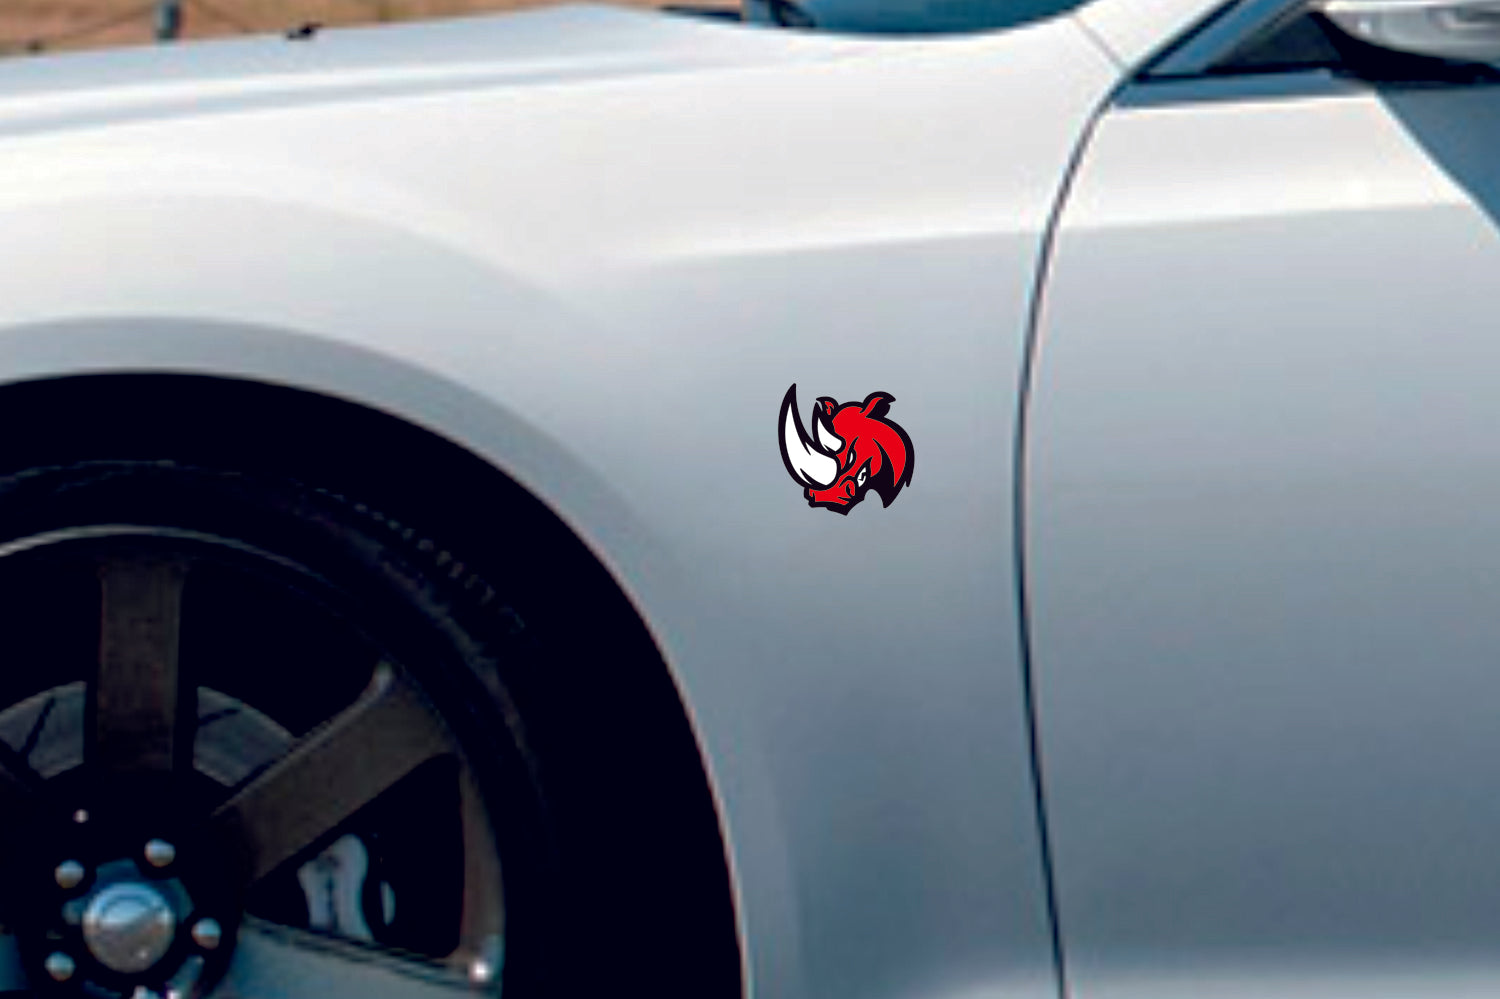 Car emblem badge for fenders with logo Rhino